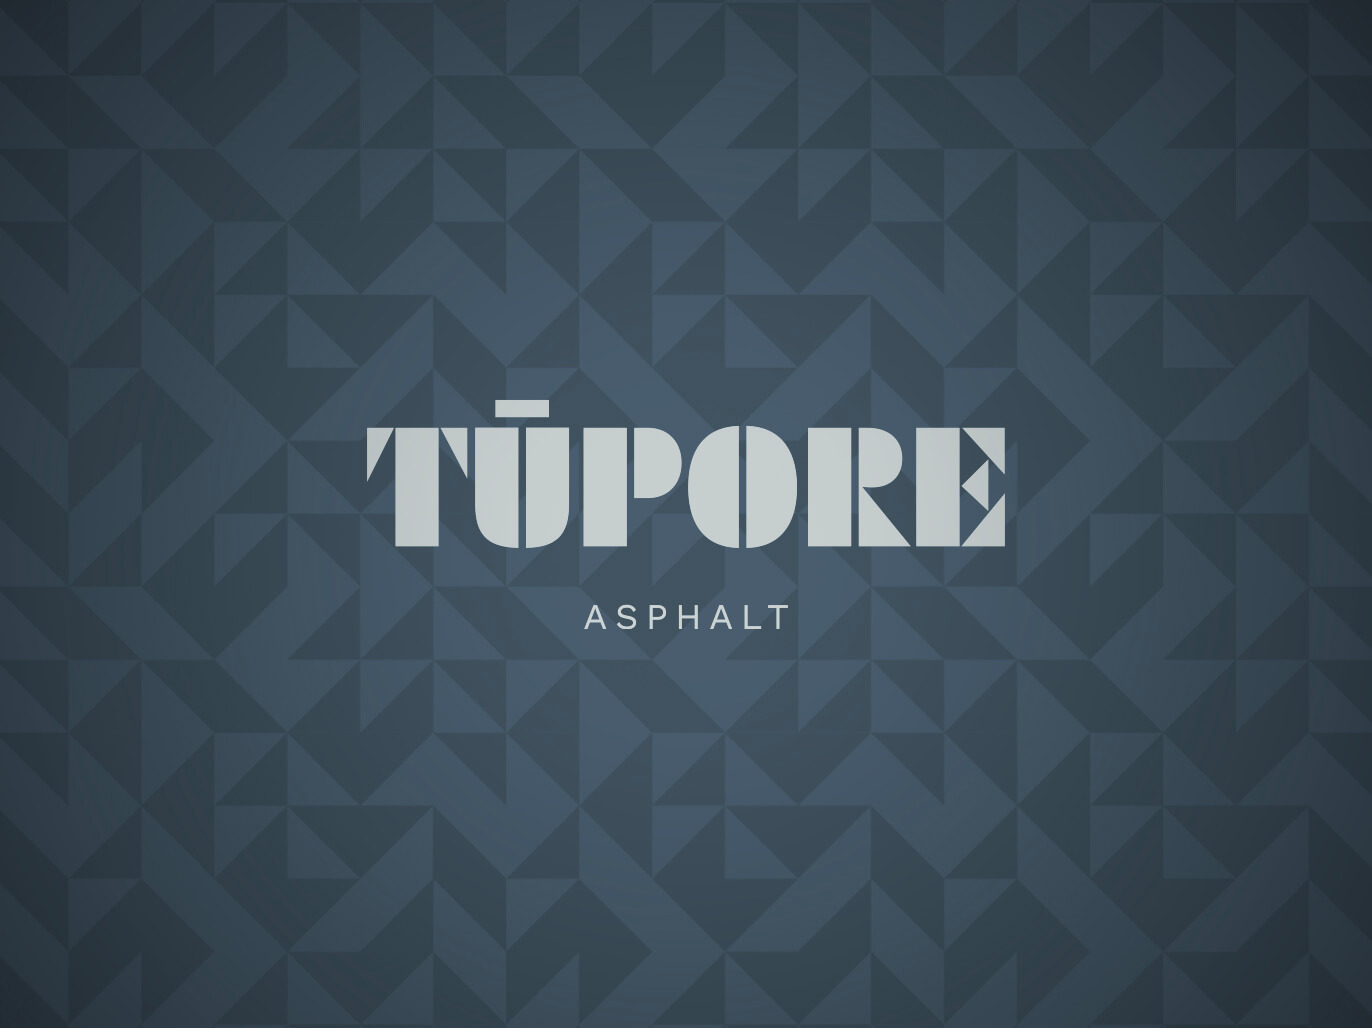 Many-Hats-Tupore-infrastructure-Asphalt-logo